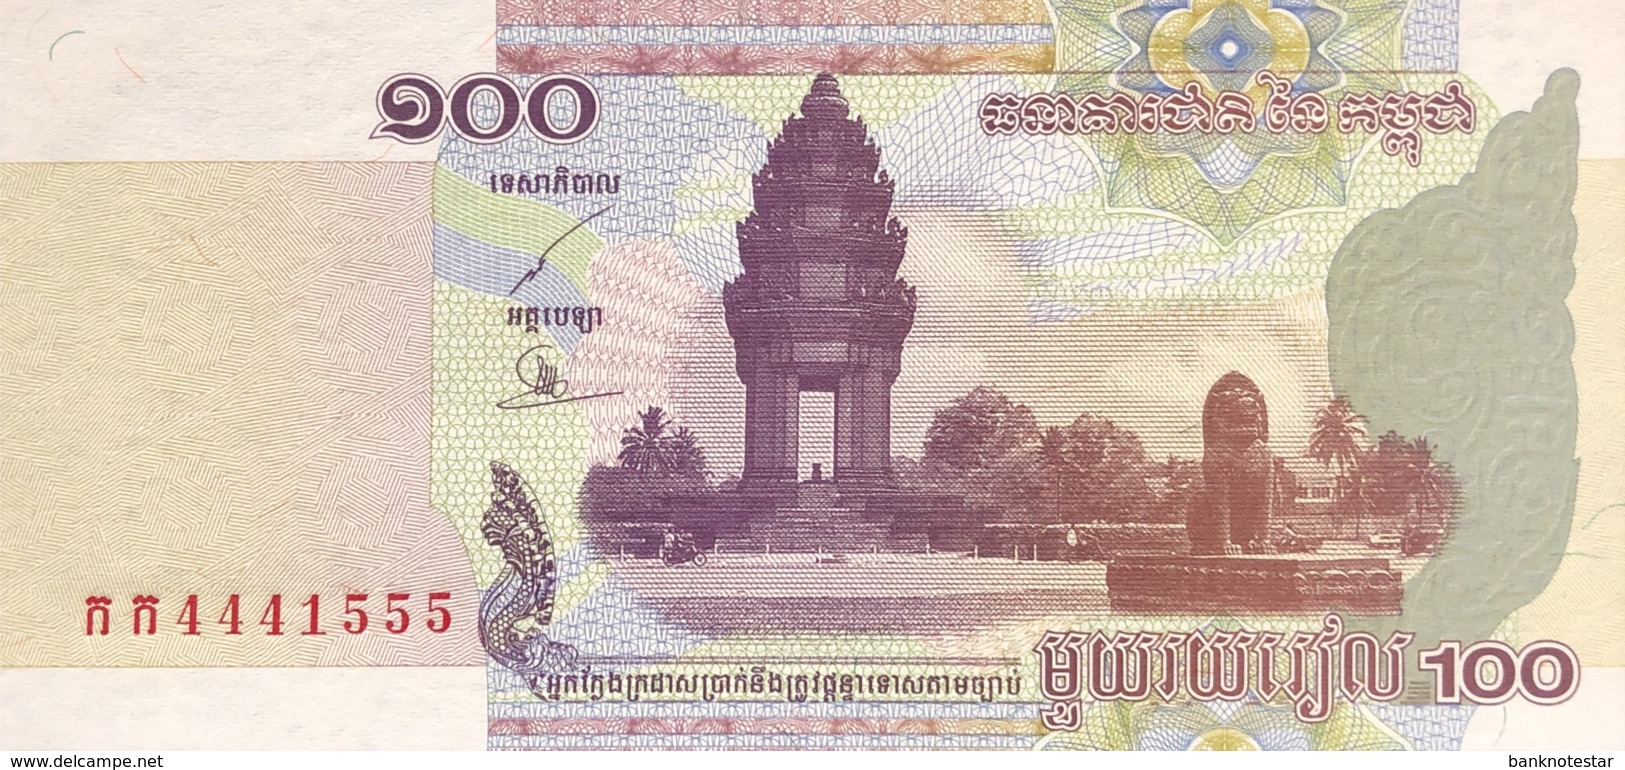 Cambodia 100 Riel, P-53 (2001) - UNC - Serial Number 4441555 - Kambodscha